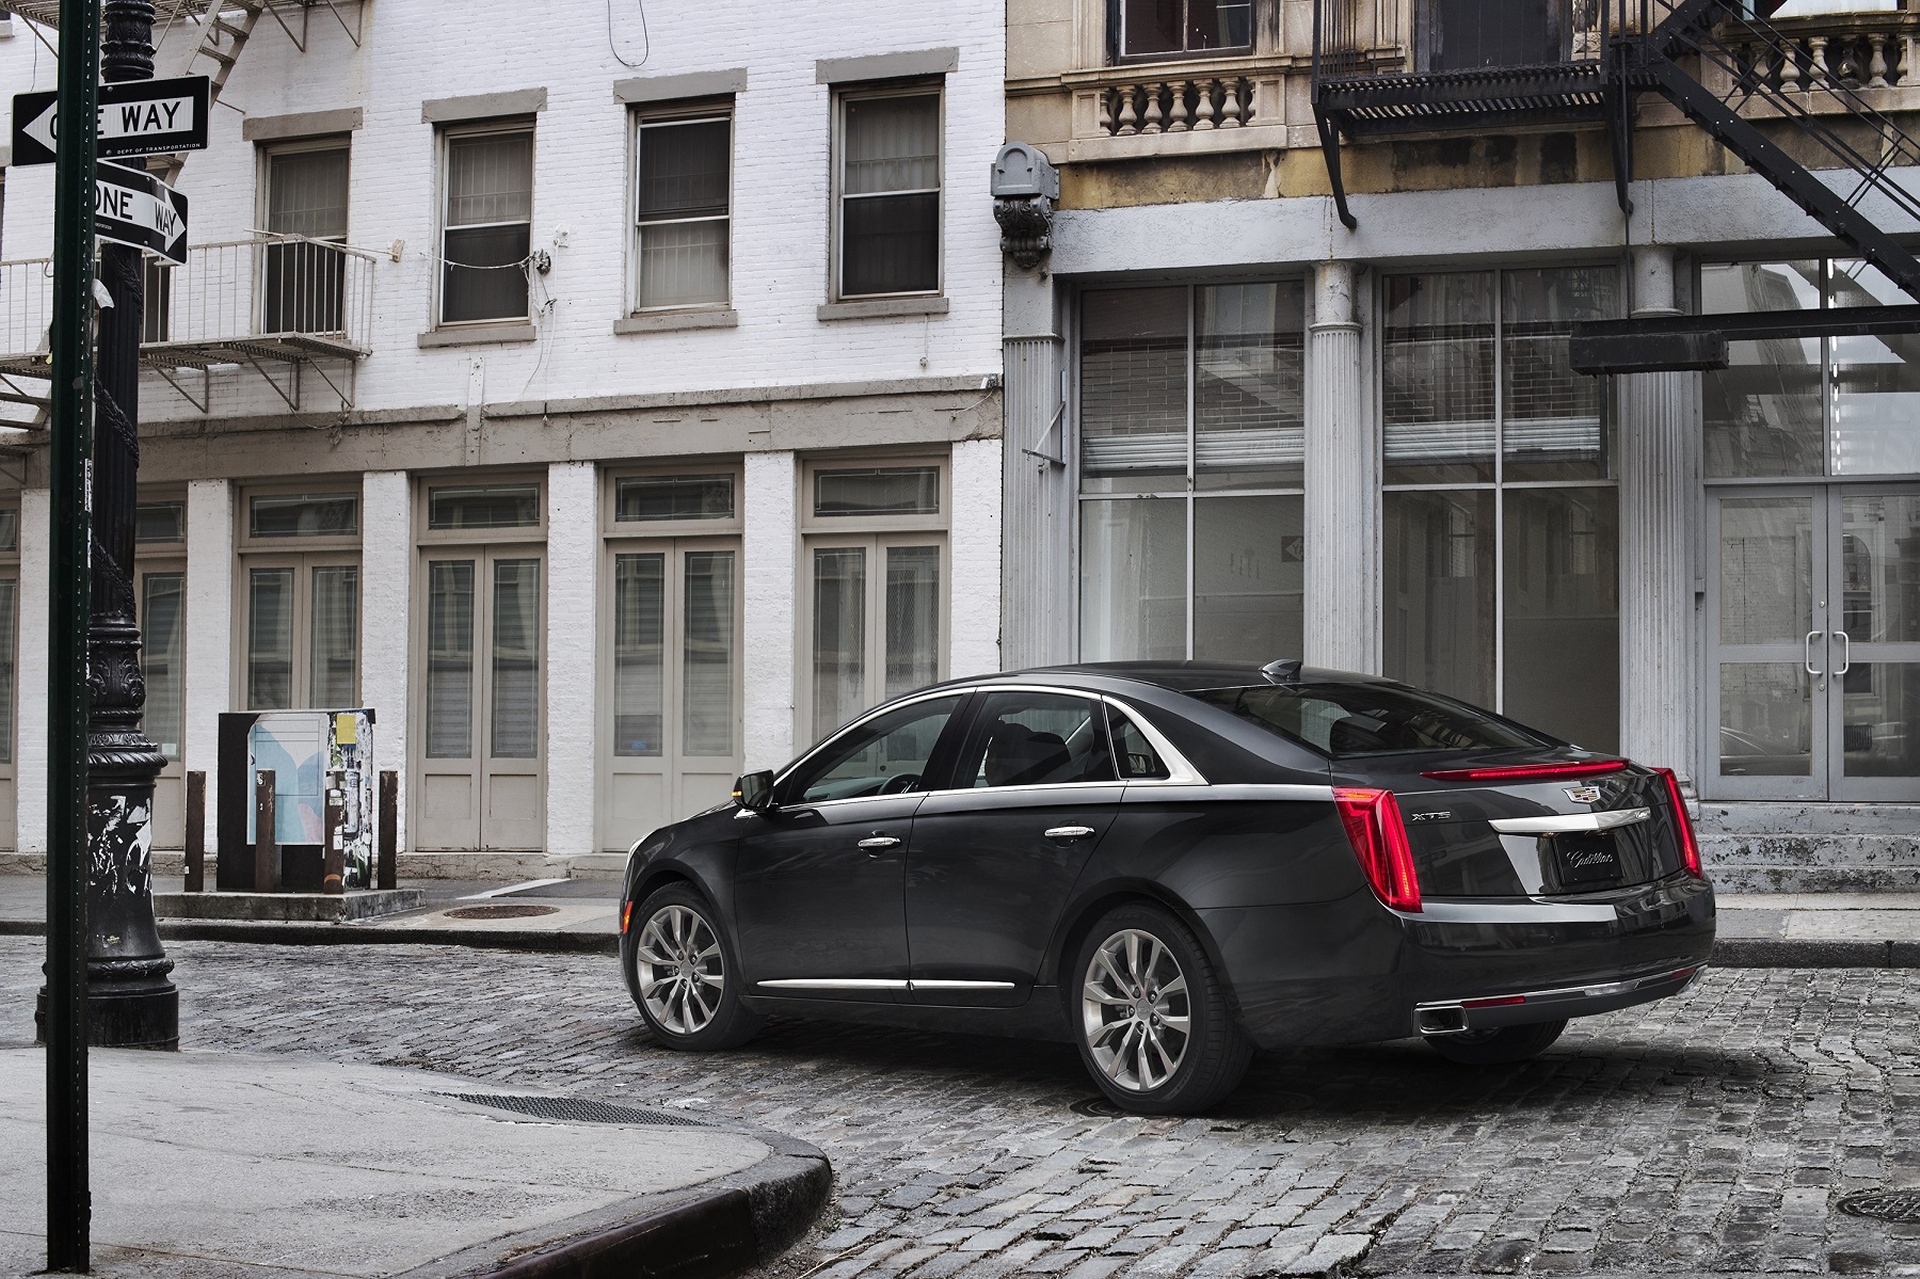 2017 Cadillac XTS - Grey Exterior - Rear Side Quarter